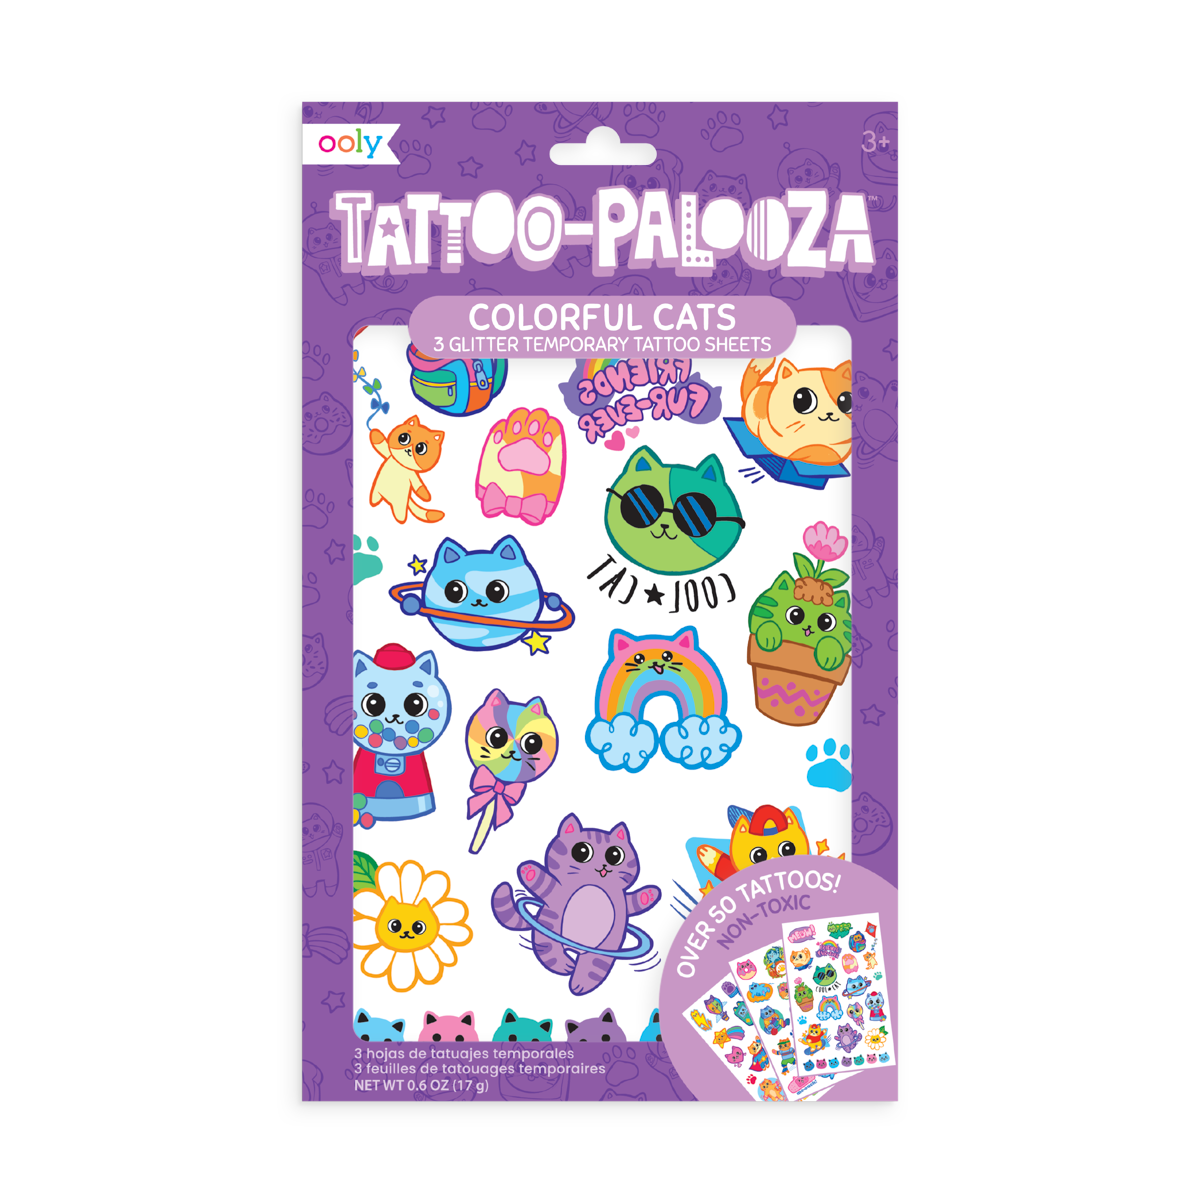 Tattoo-Palooza Temporary Tattoos - Colorful Cats - 3 Sheets